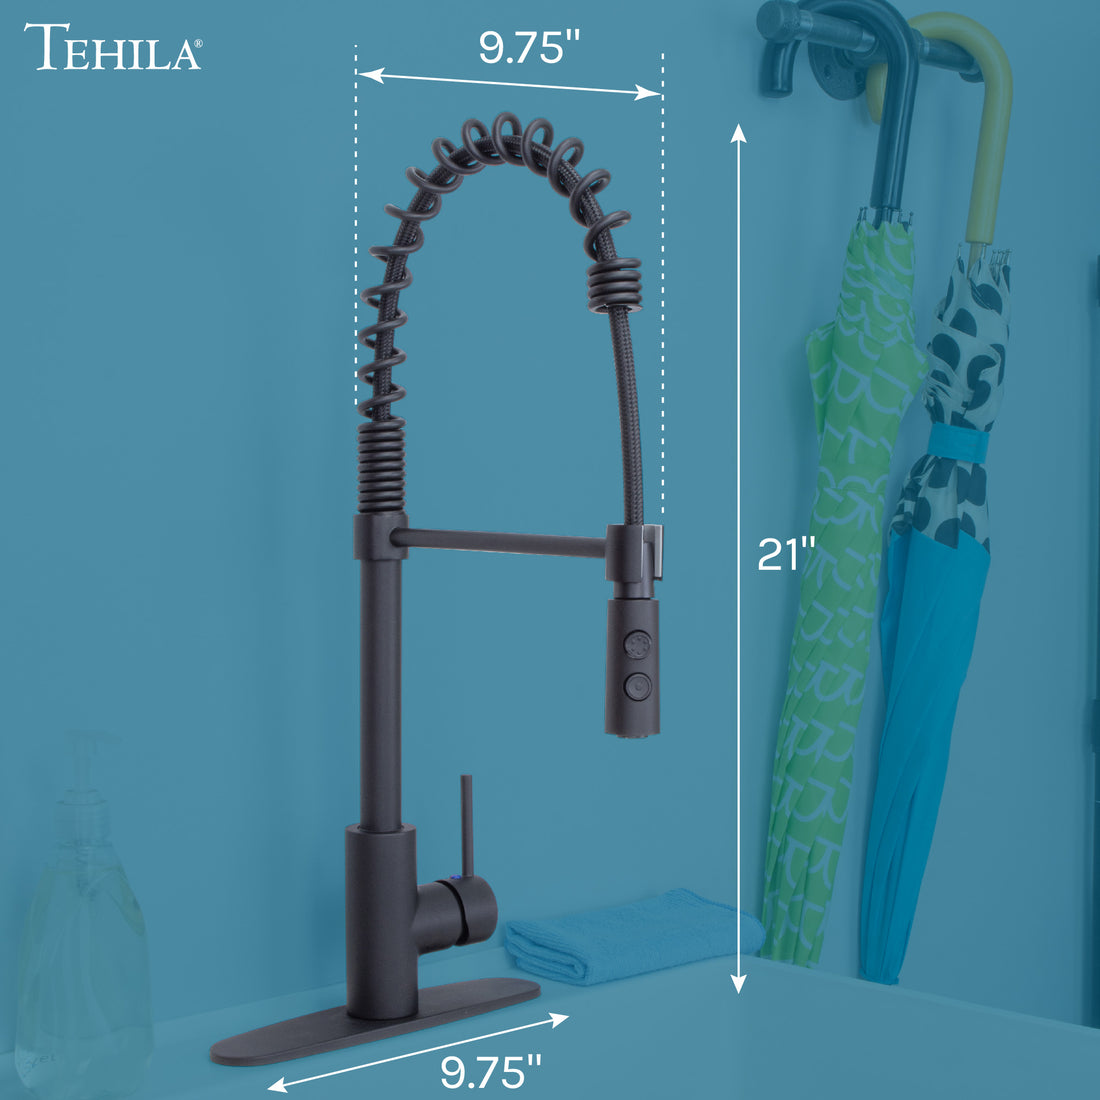 Tehila Black Finish High Arc Coil Pull-Down Faucet - Utility sinks vanites Tehila